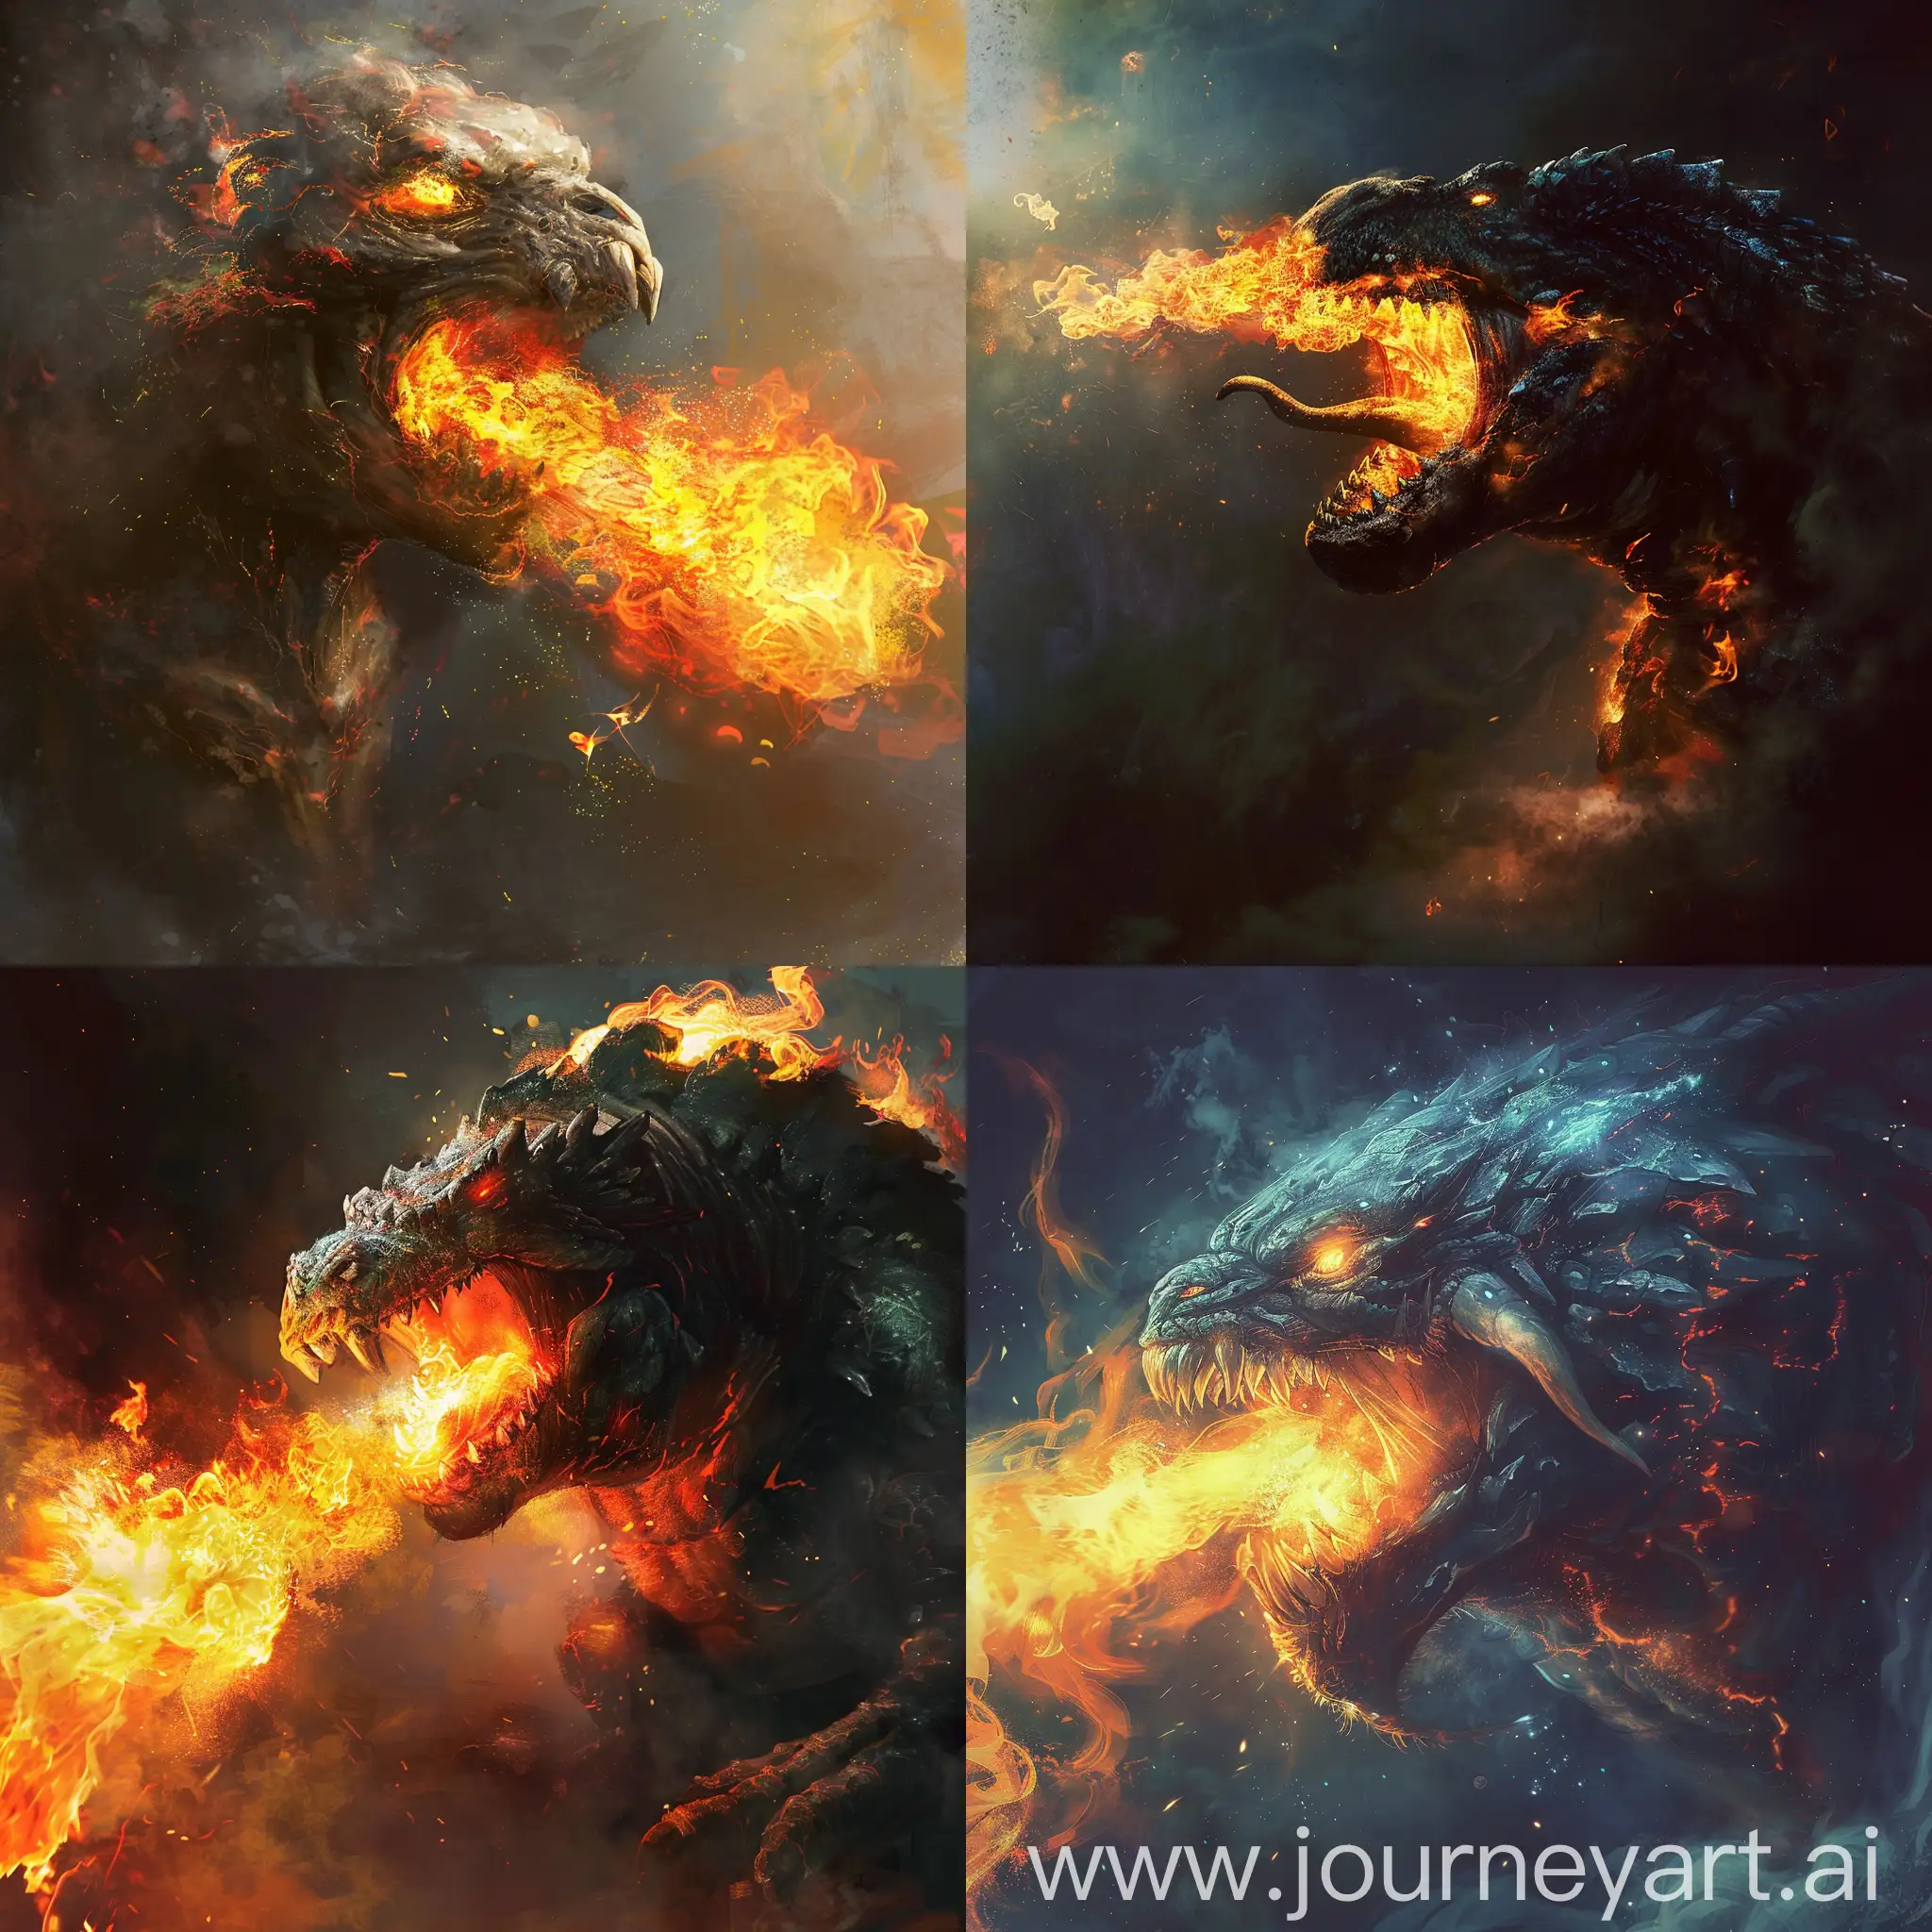 Fierce-Dragon-Breathing-Fire-in-Mythical-Landscape